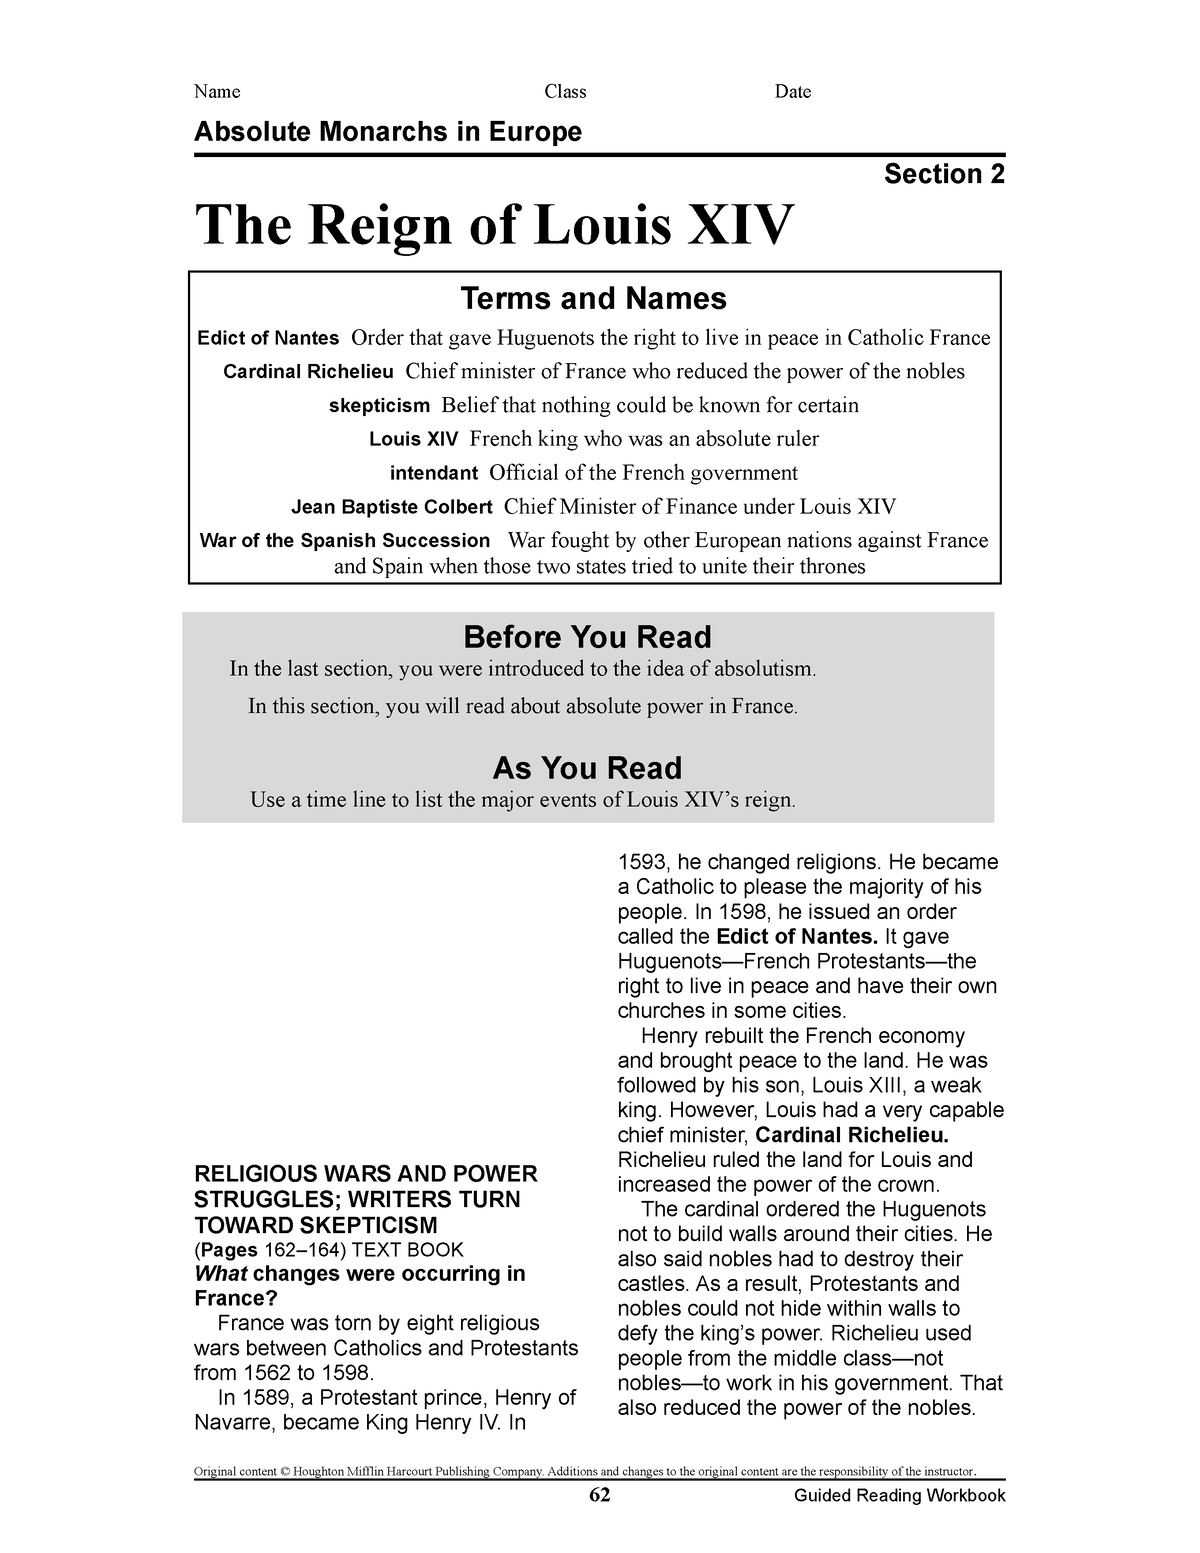 Introduction to M. Samuel Sorbière's letter to King Louis XIV